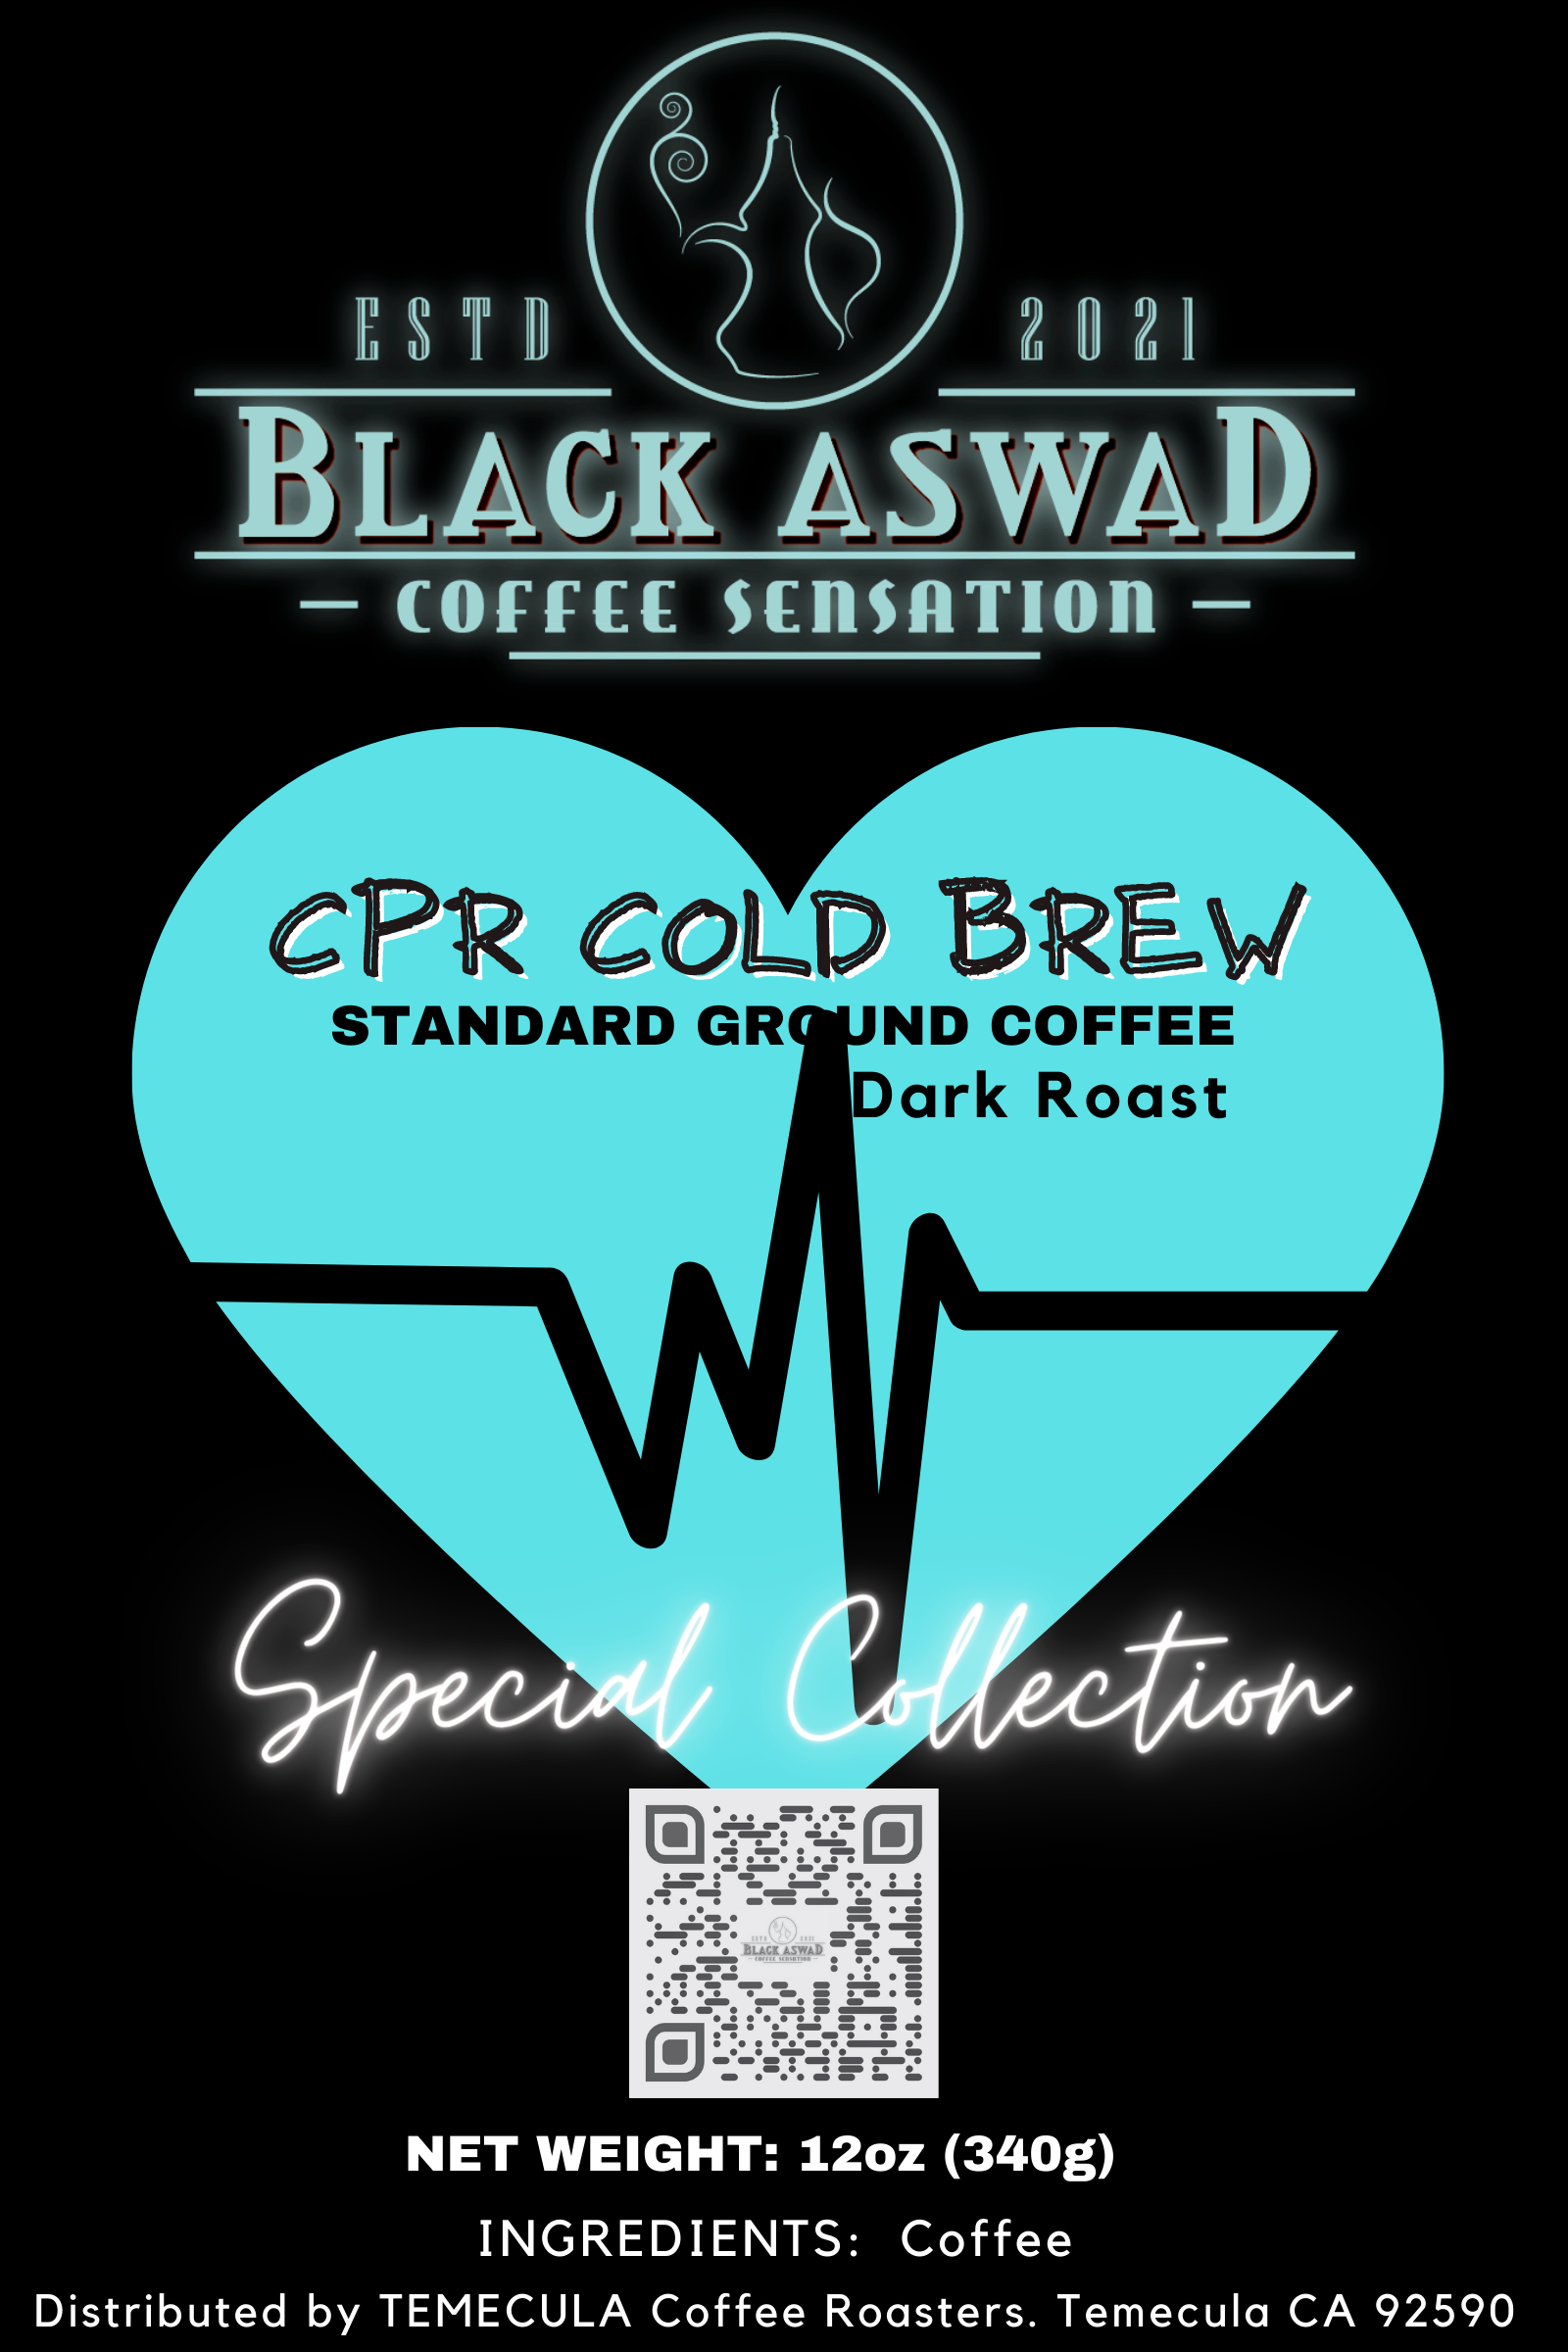 CPR Cold Brew - Black Aswad